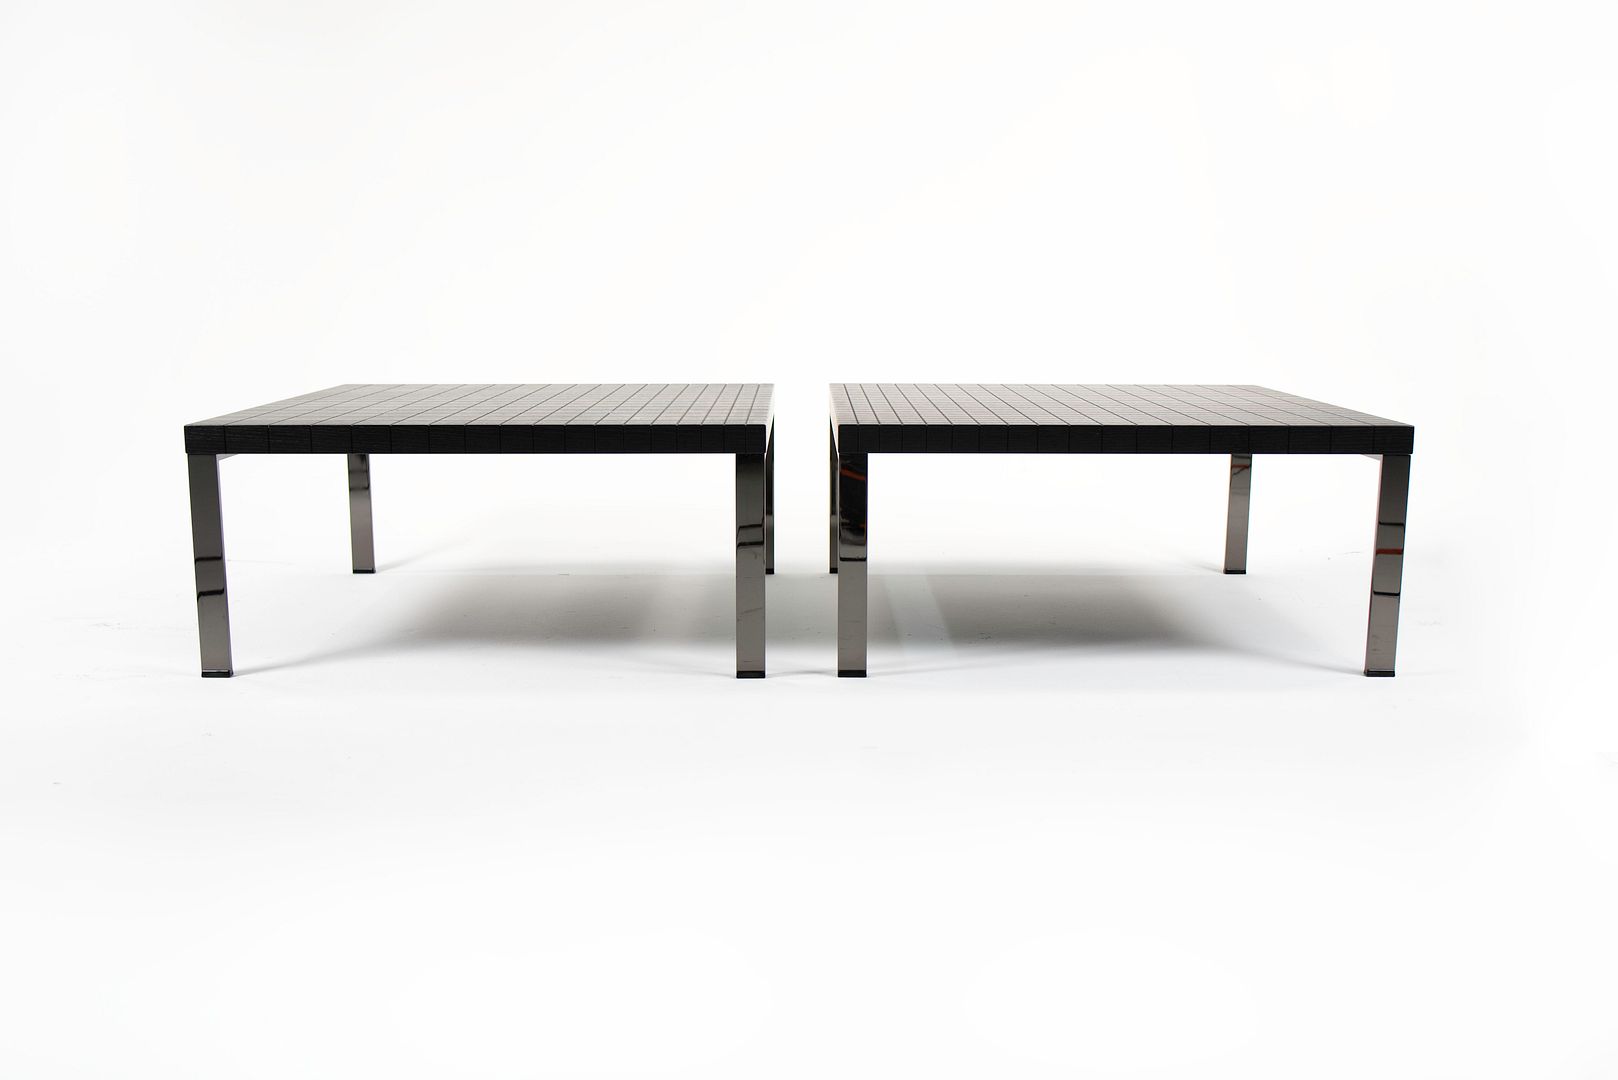 2014 Geometrie Table by Poltrona Frau in Wenge and Steel